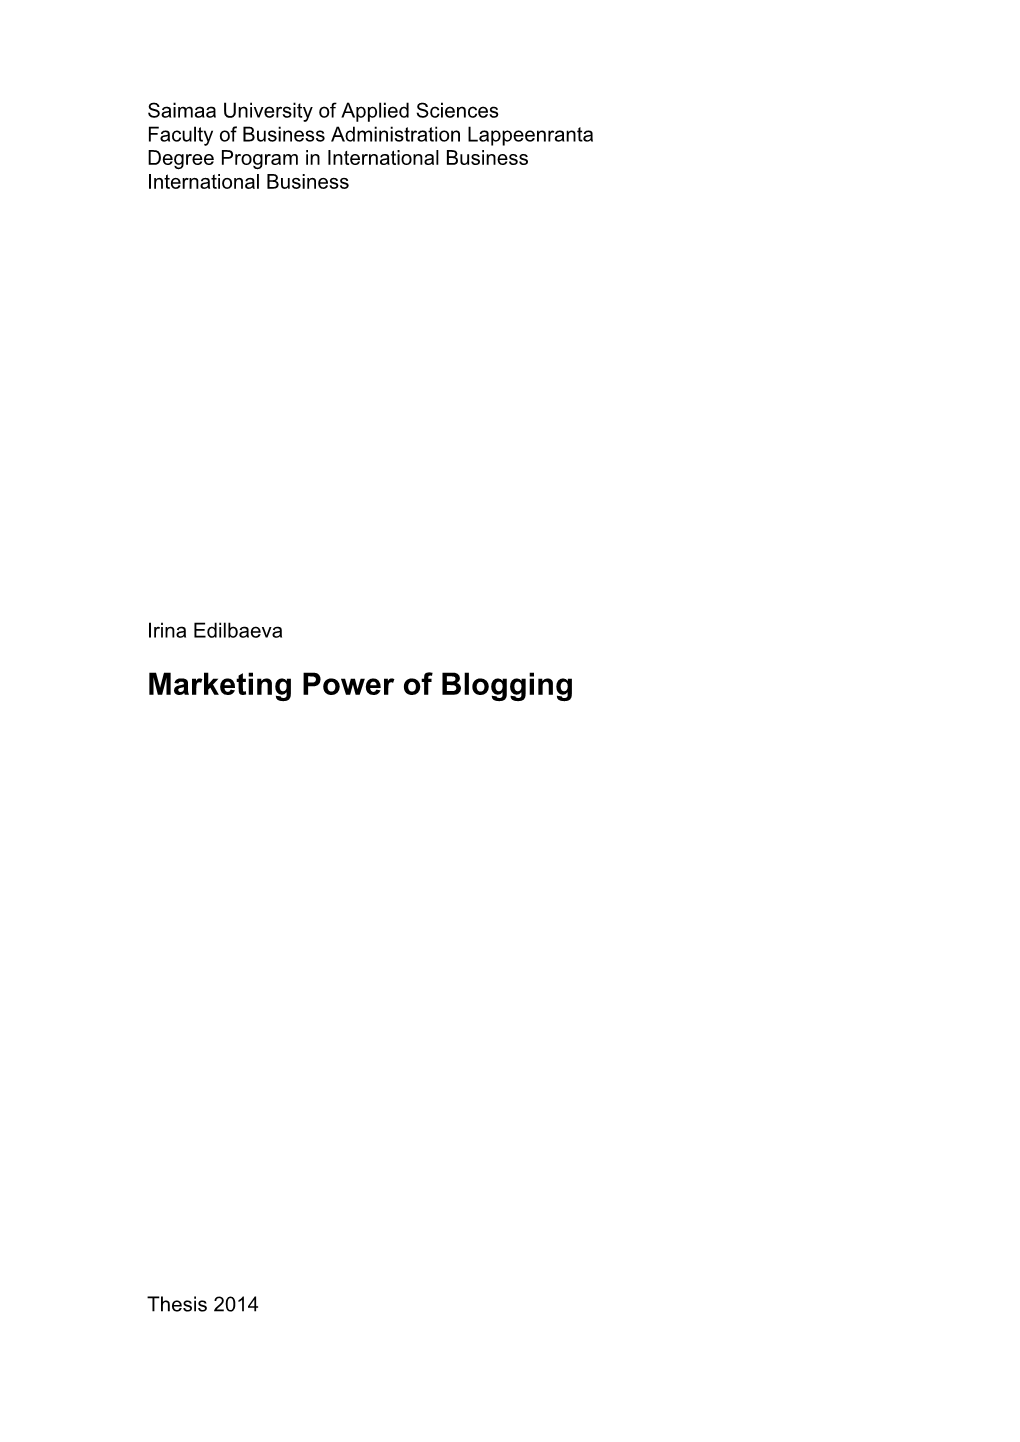 Marketing Power of Blogging